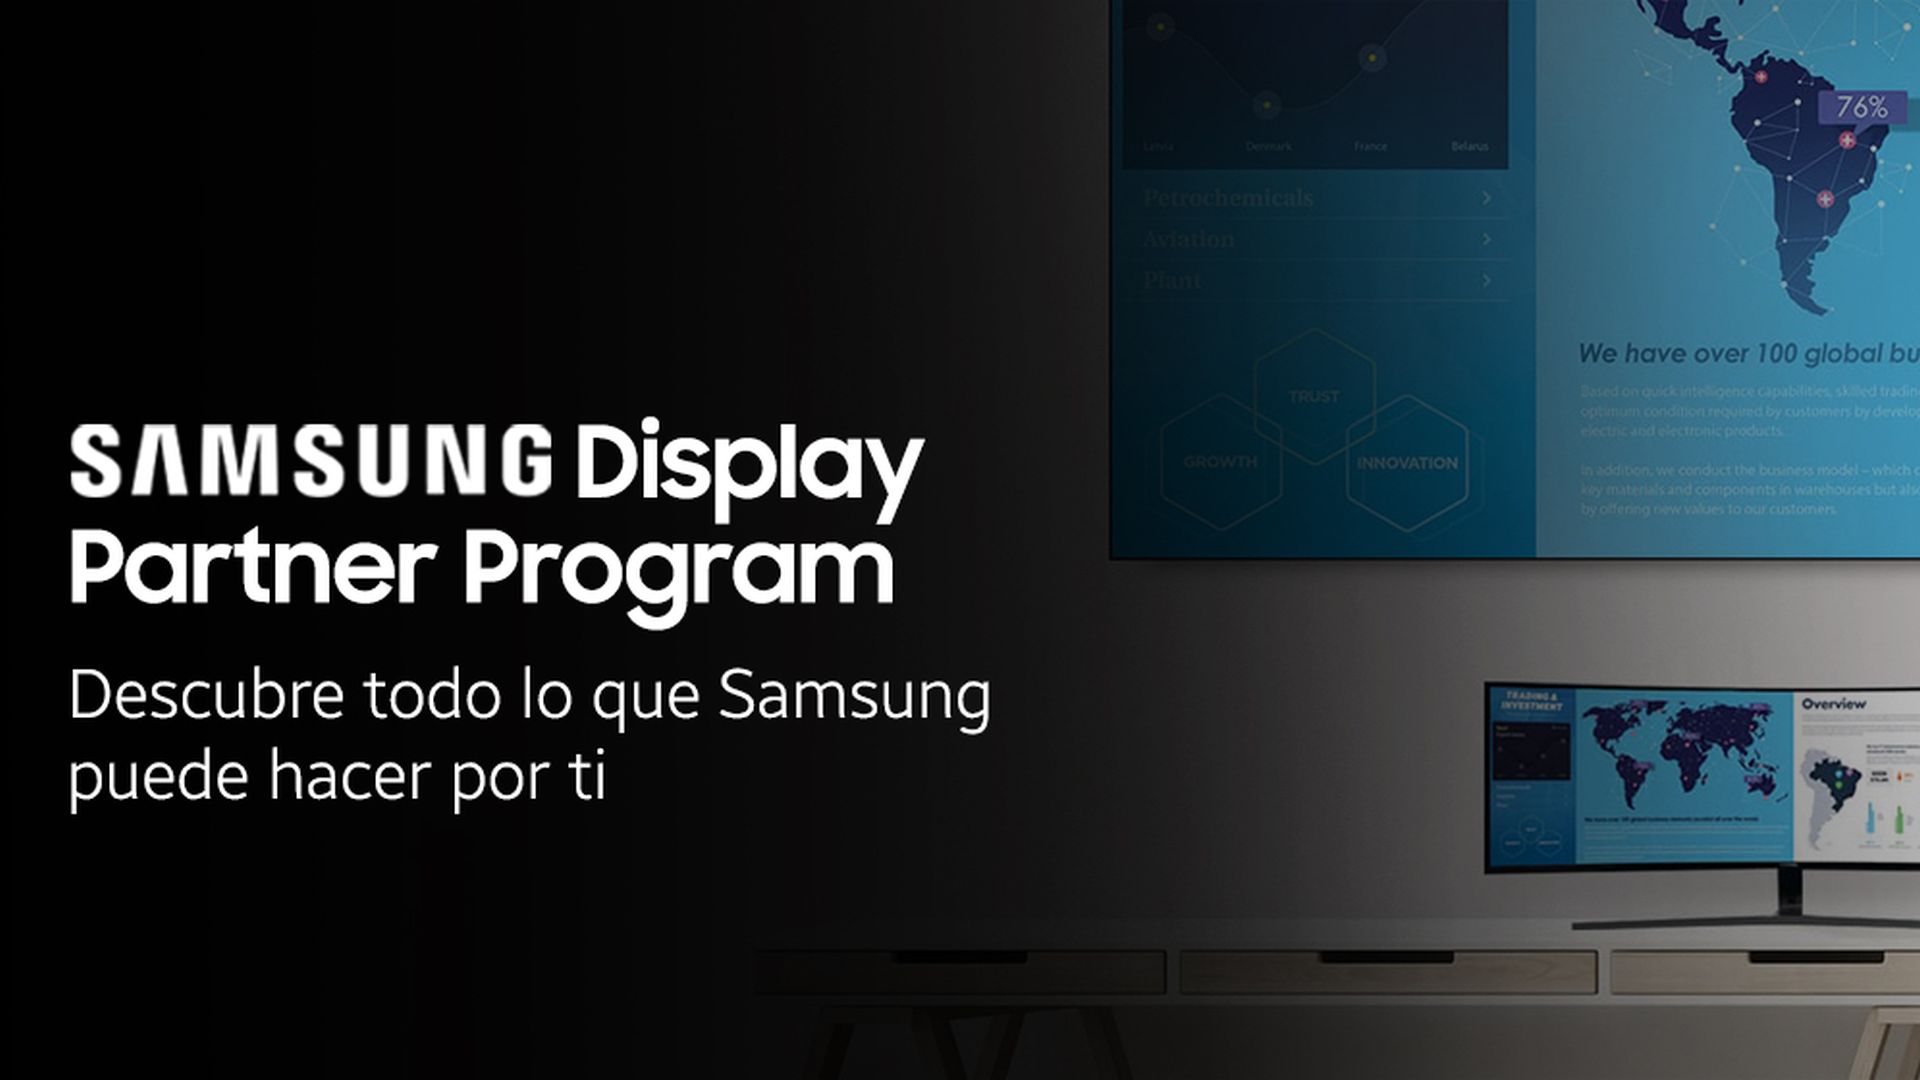 Samsung Display Partners Program